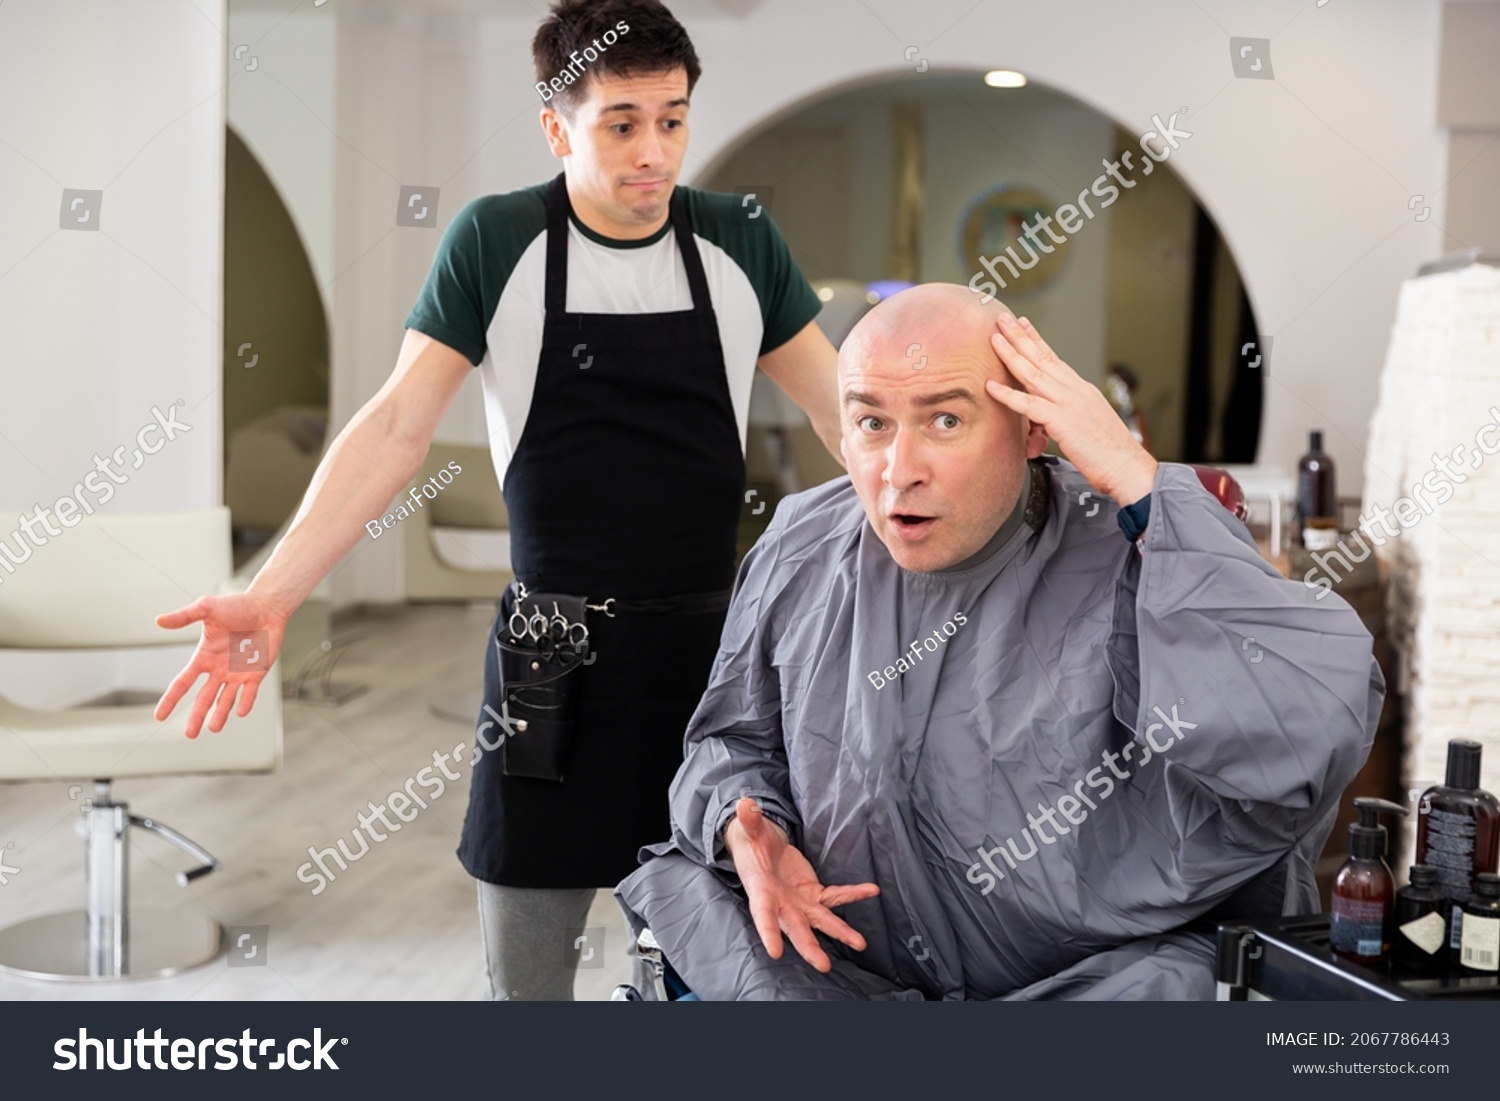 dennis carbonilla share fuck team barber shop photos